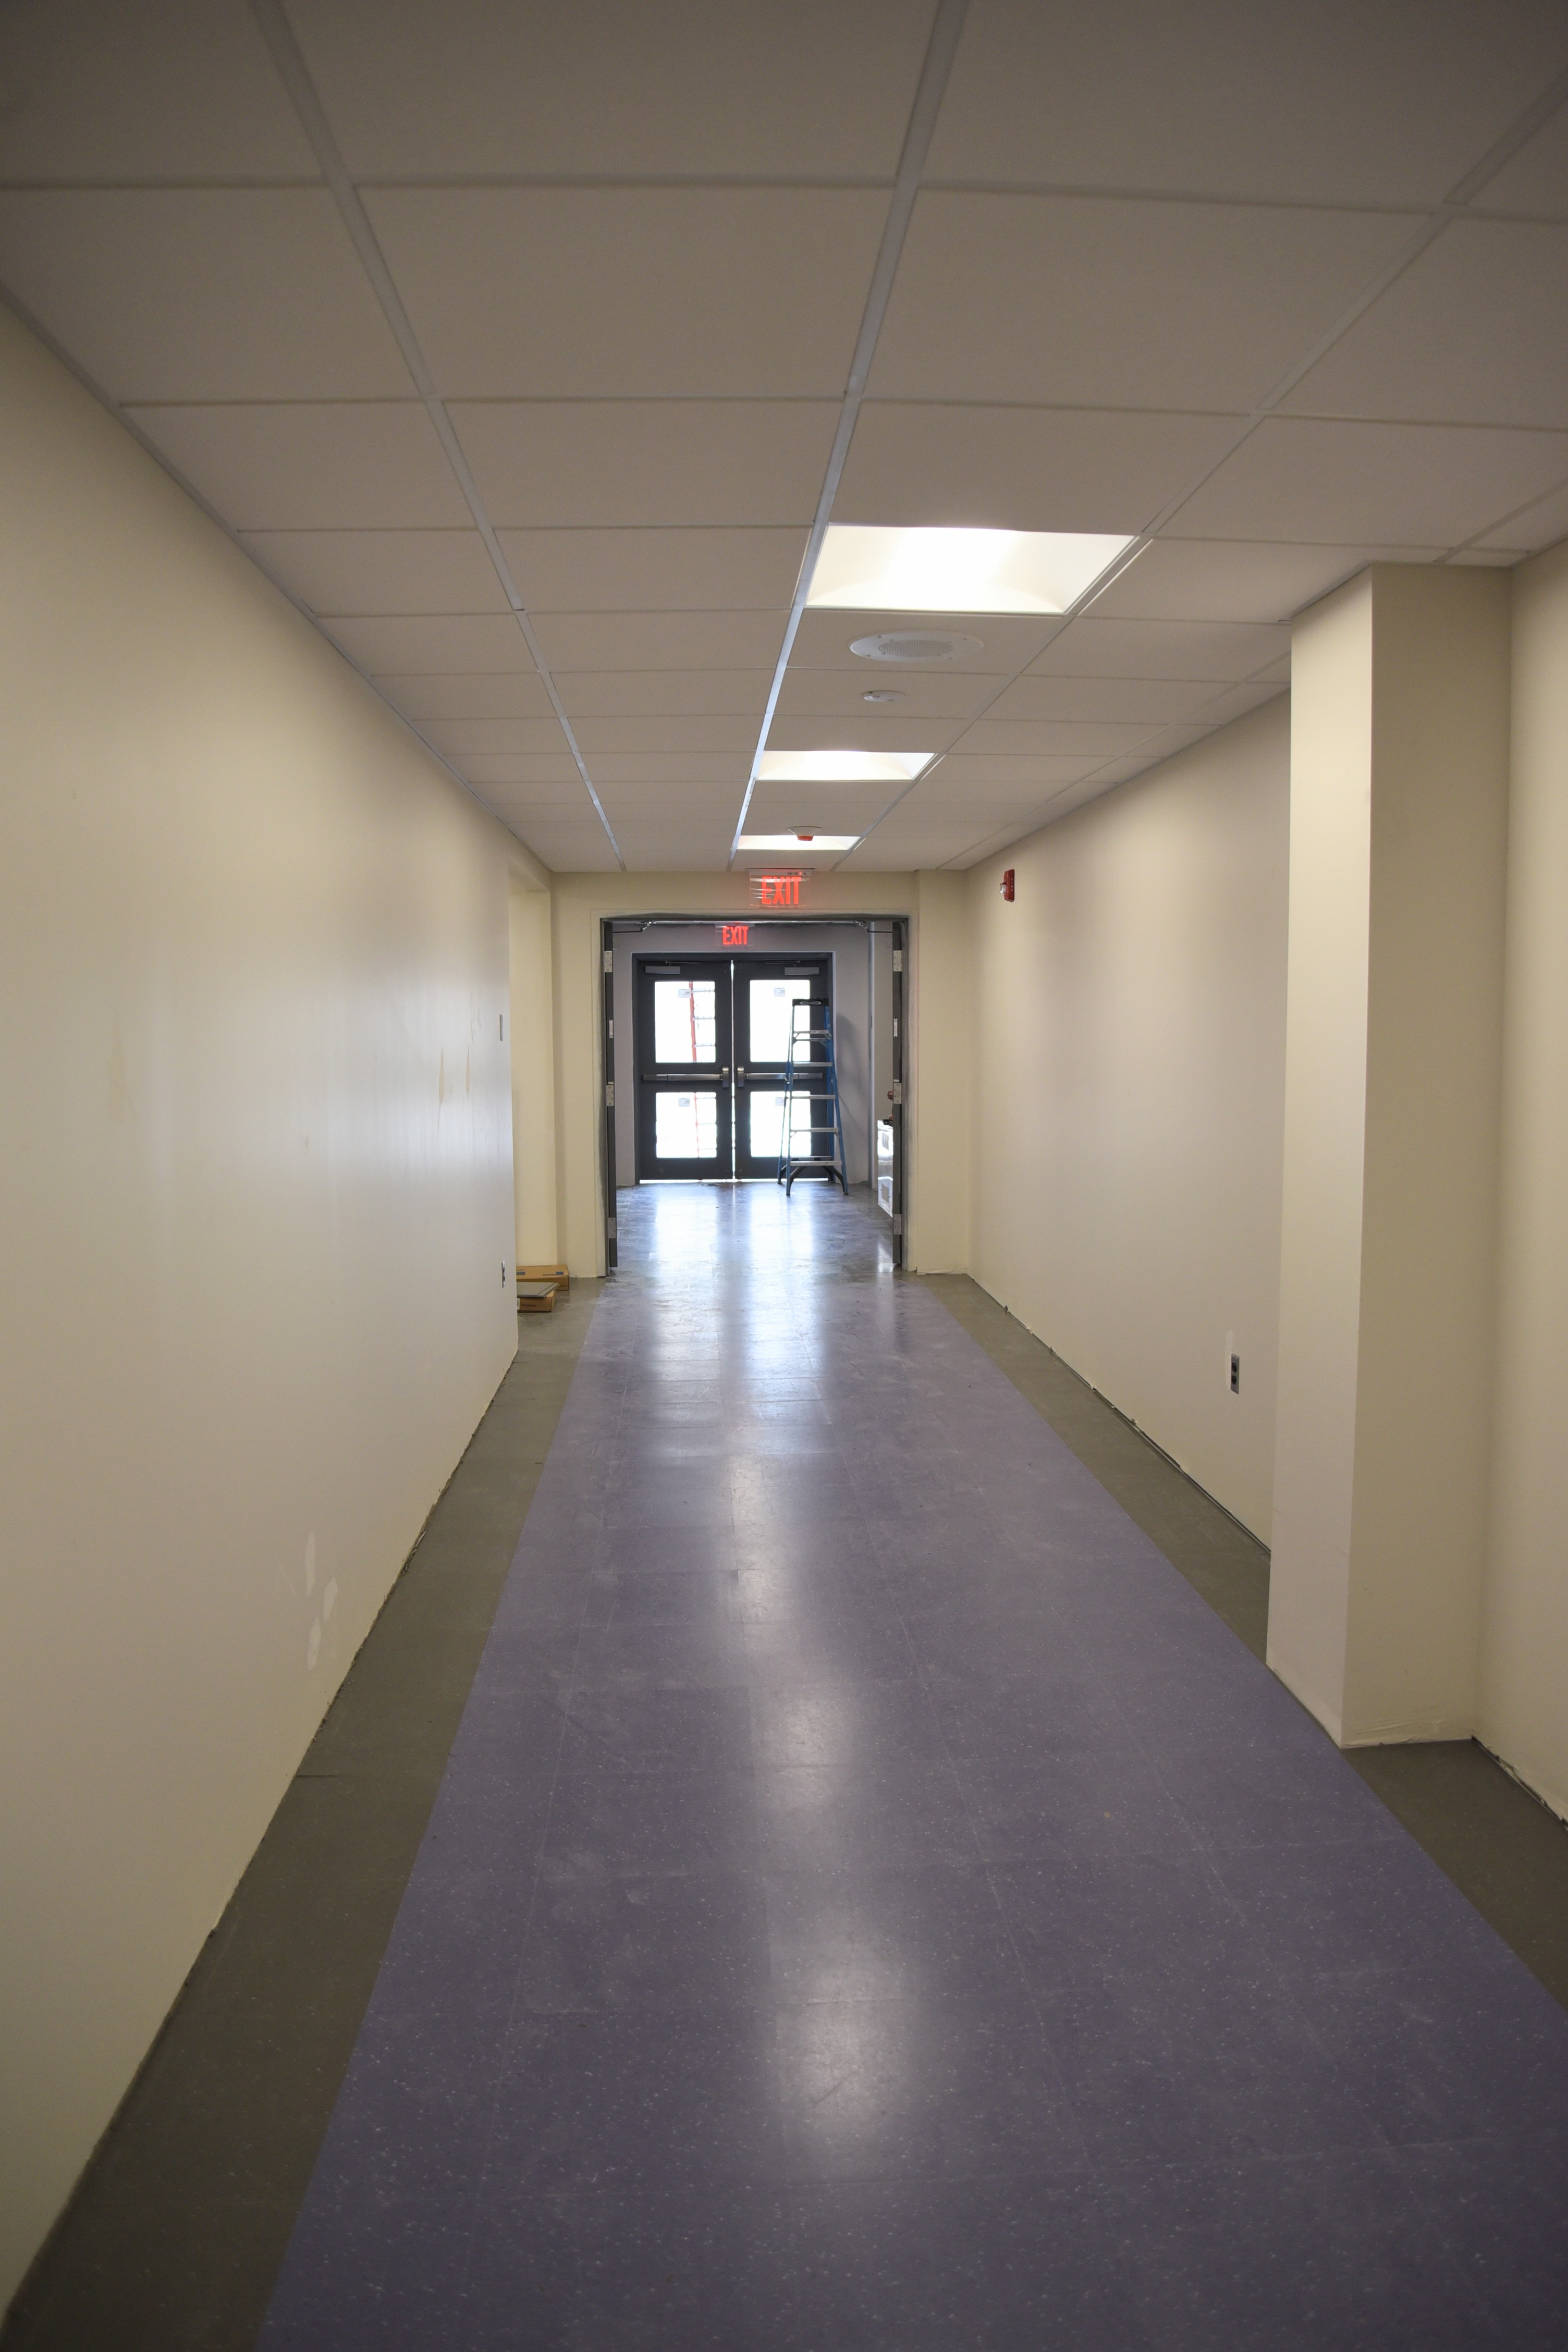 Hallway during construction